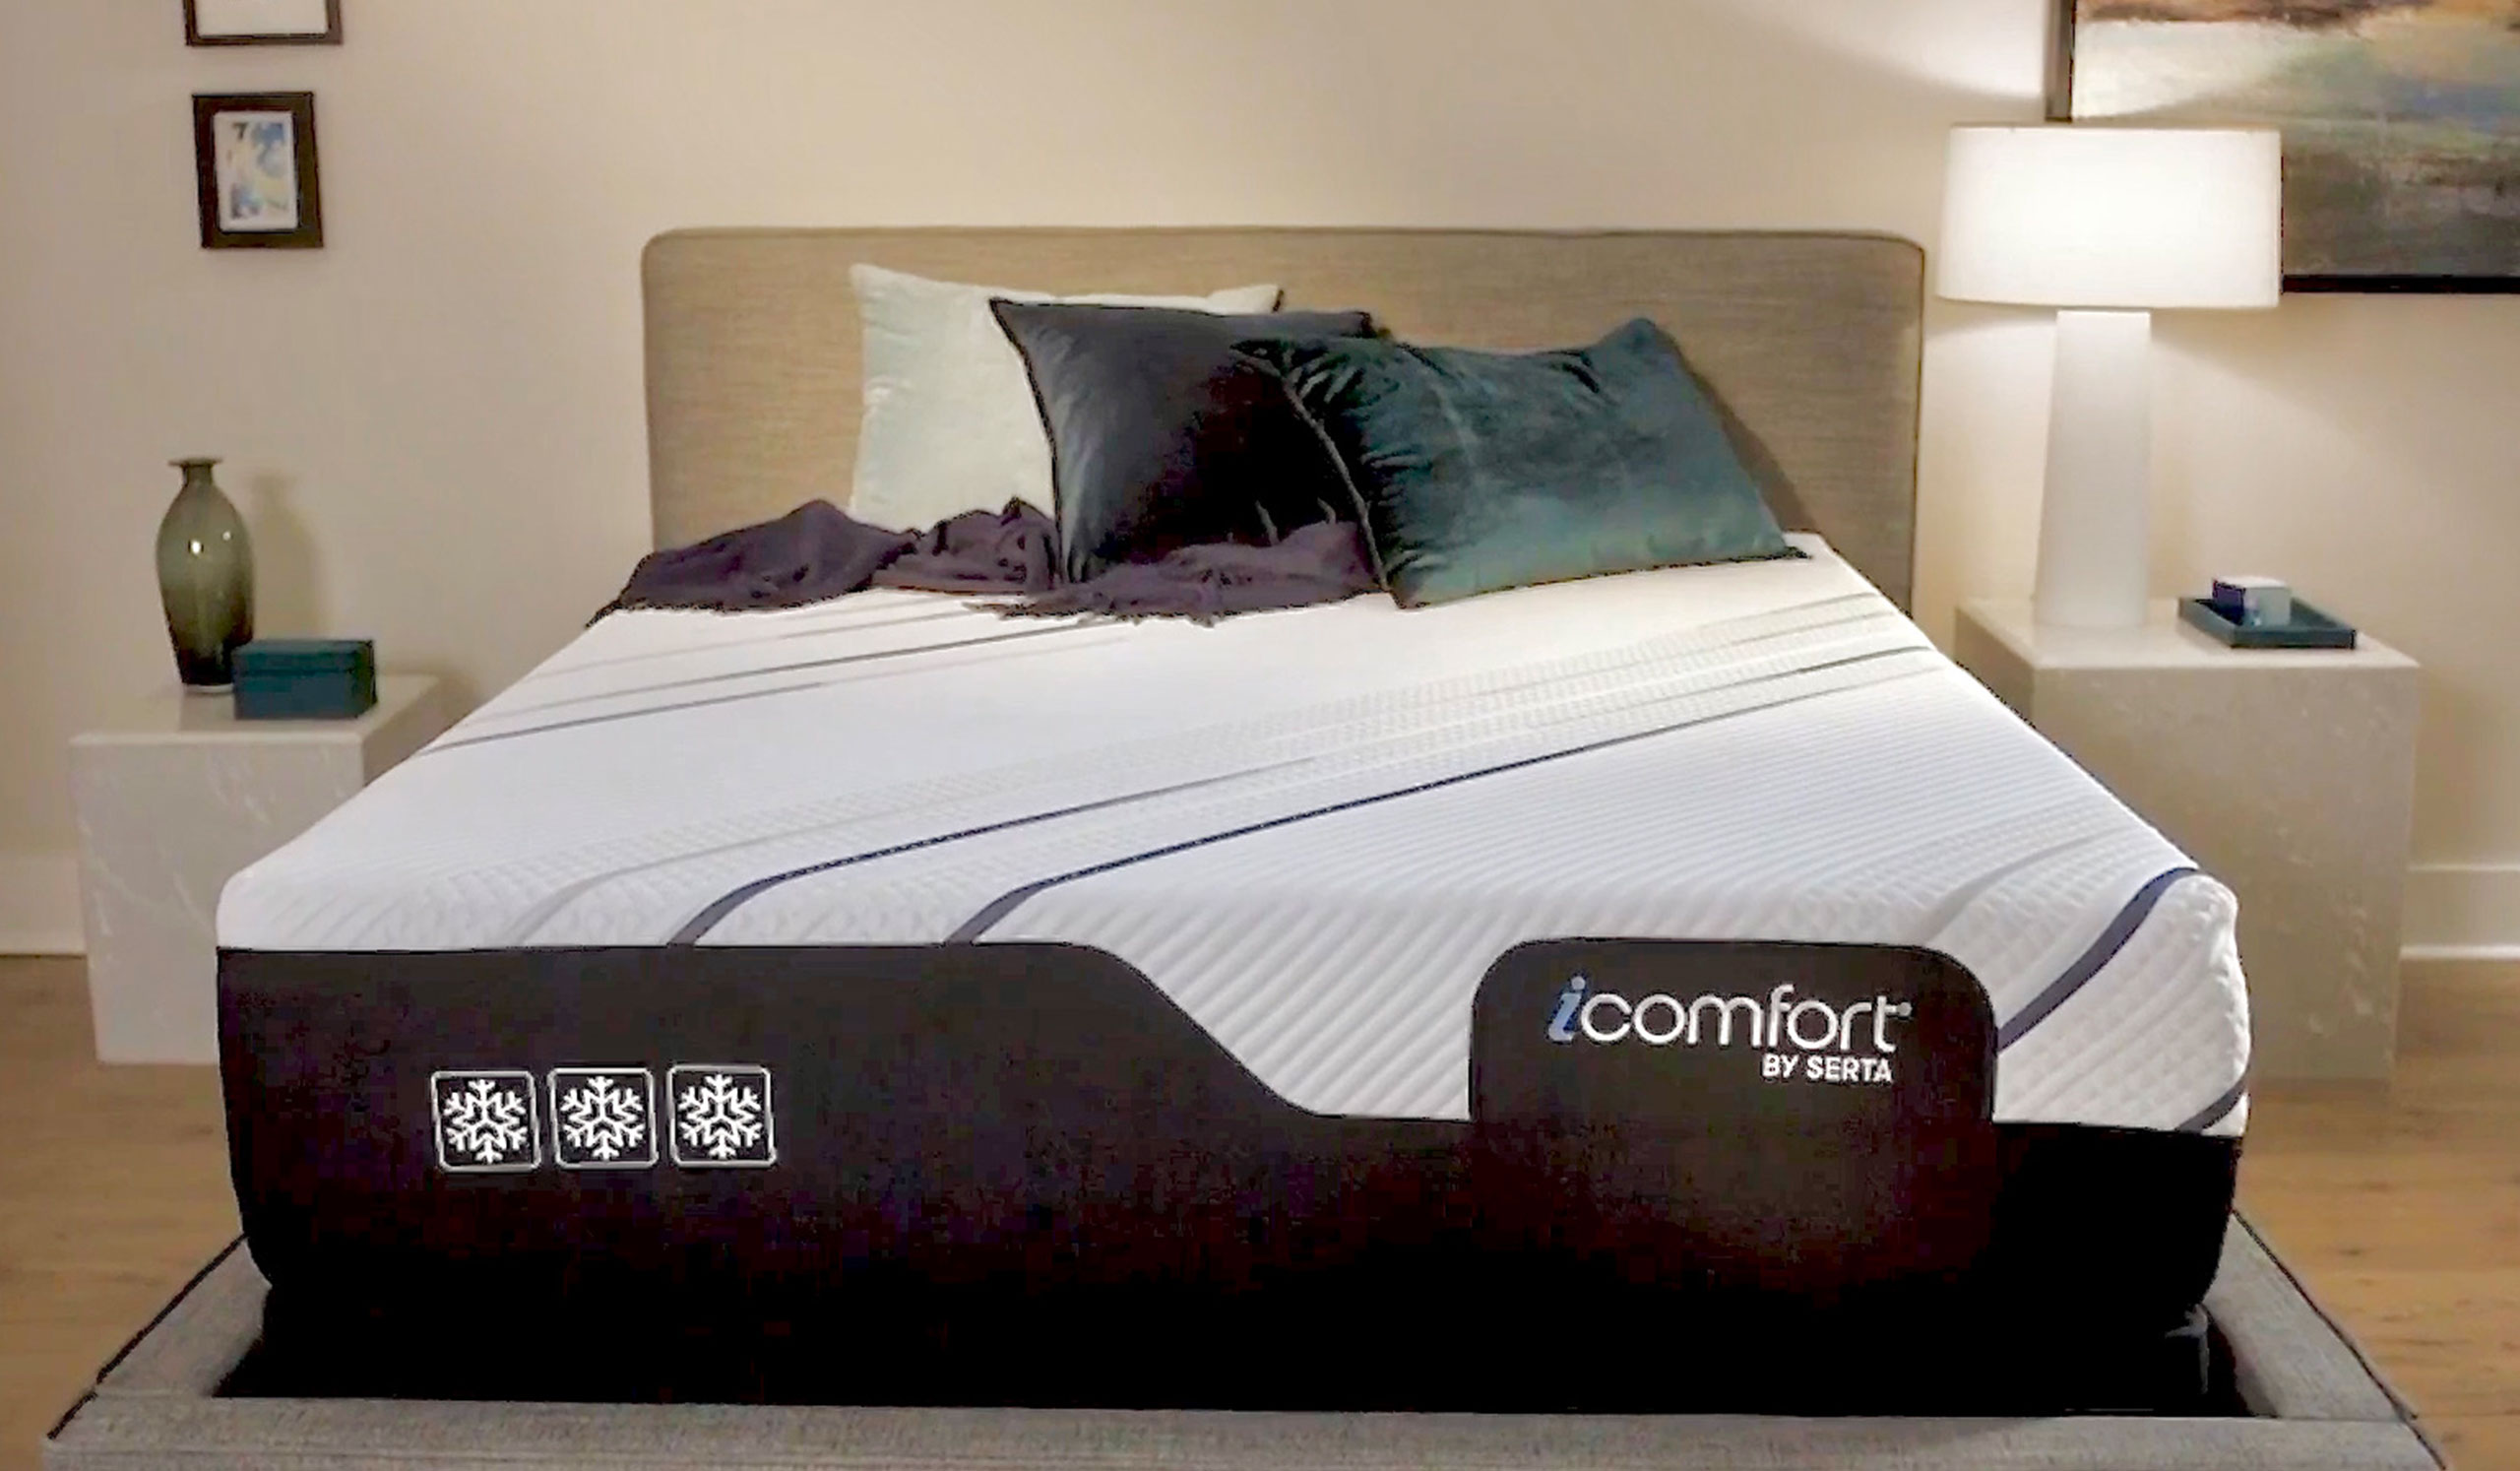 serta icomfort full mattresses